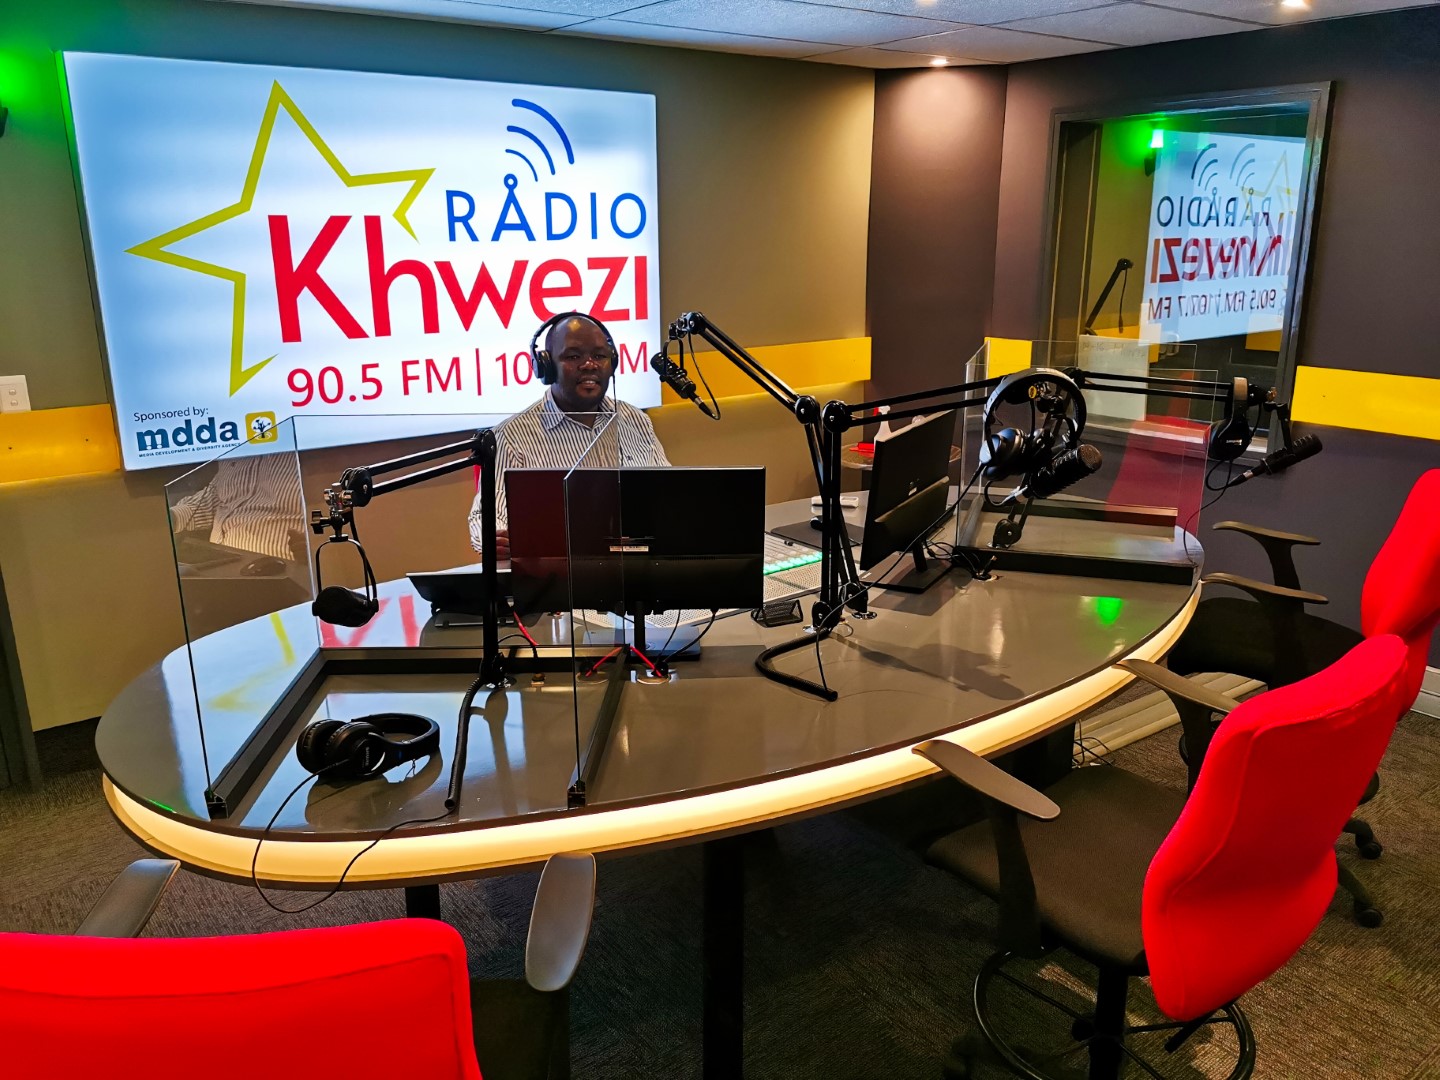 New Radio Khwezi broadcast studio